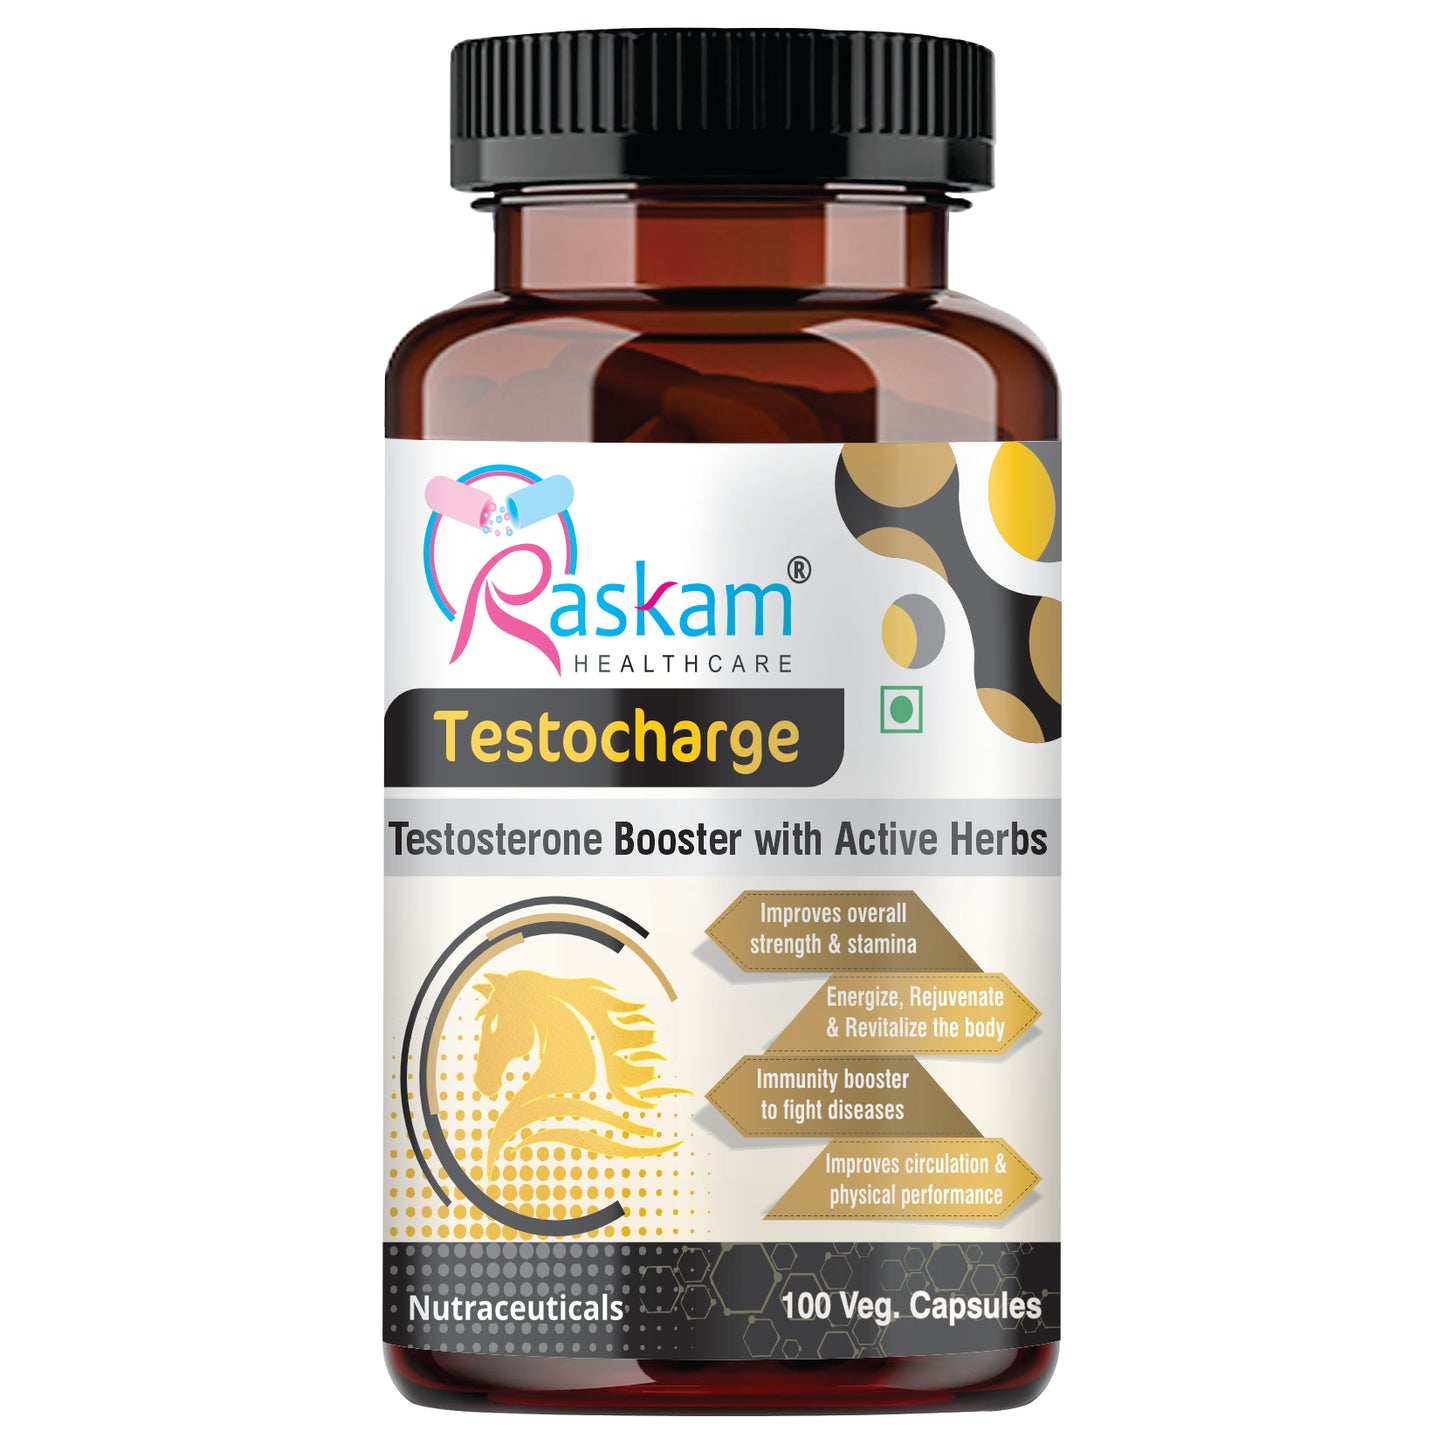 Raskam Testocharge - 100 Capsules Supports Strength & Stamina, For Men